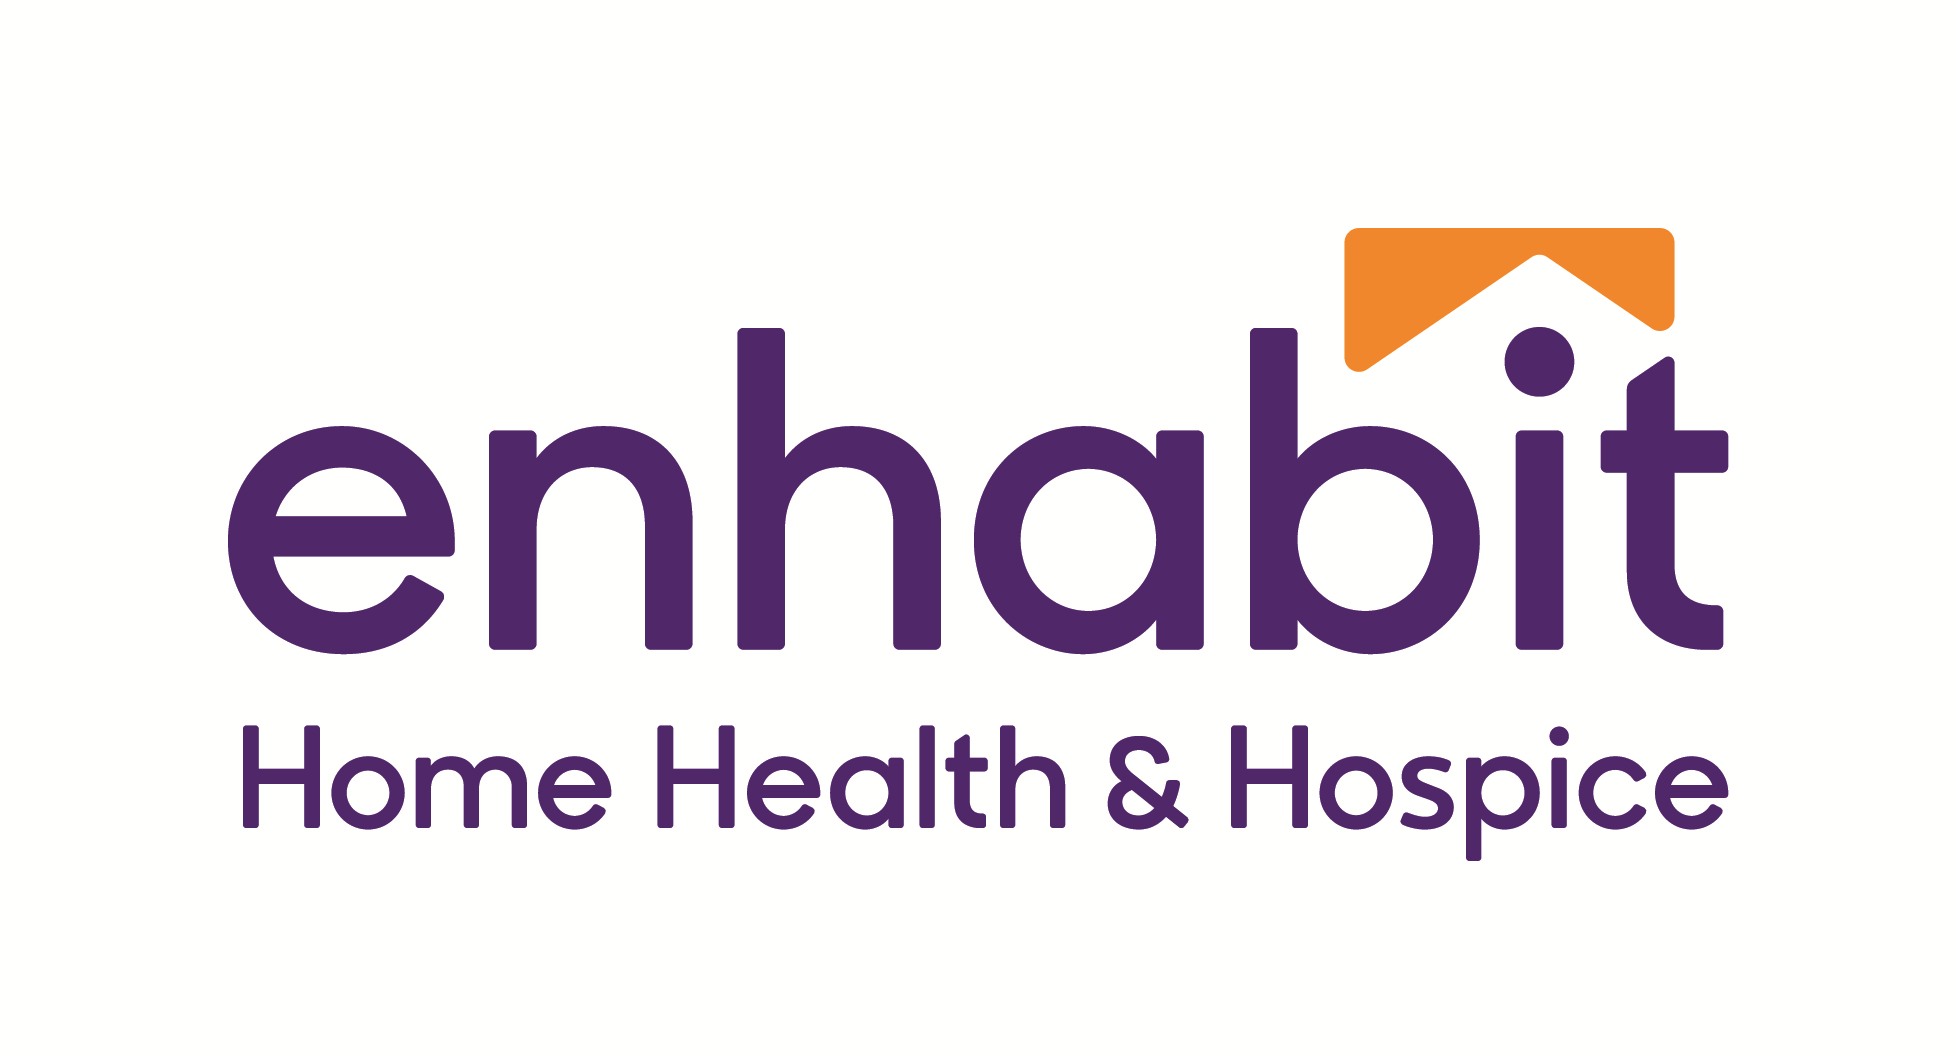 EncompassHealth - Home Health & Hospice logo